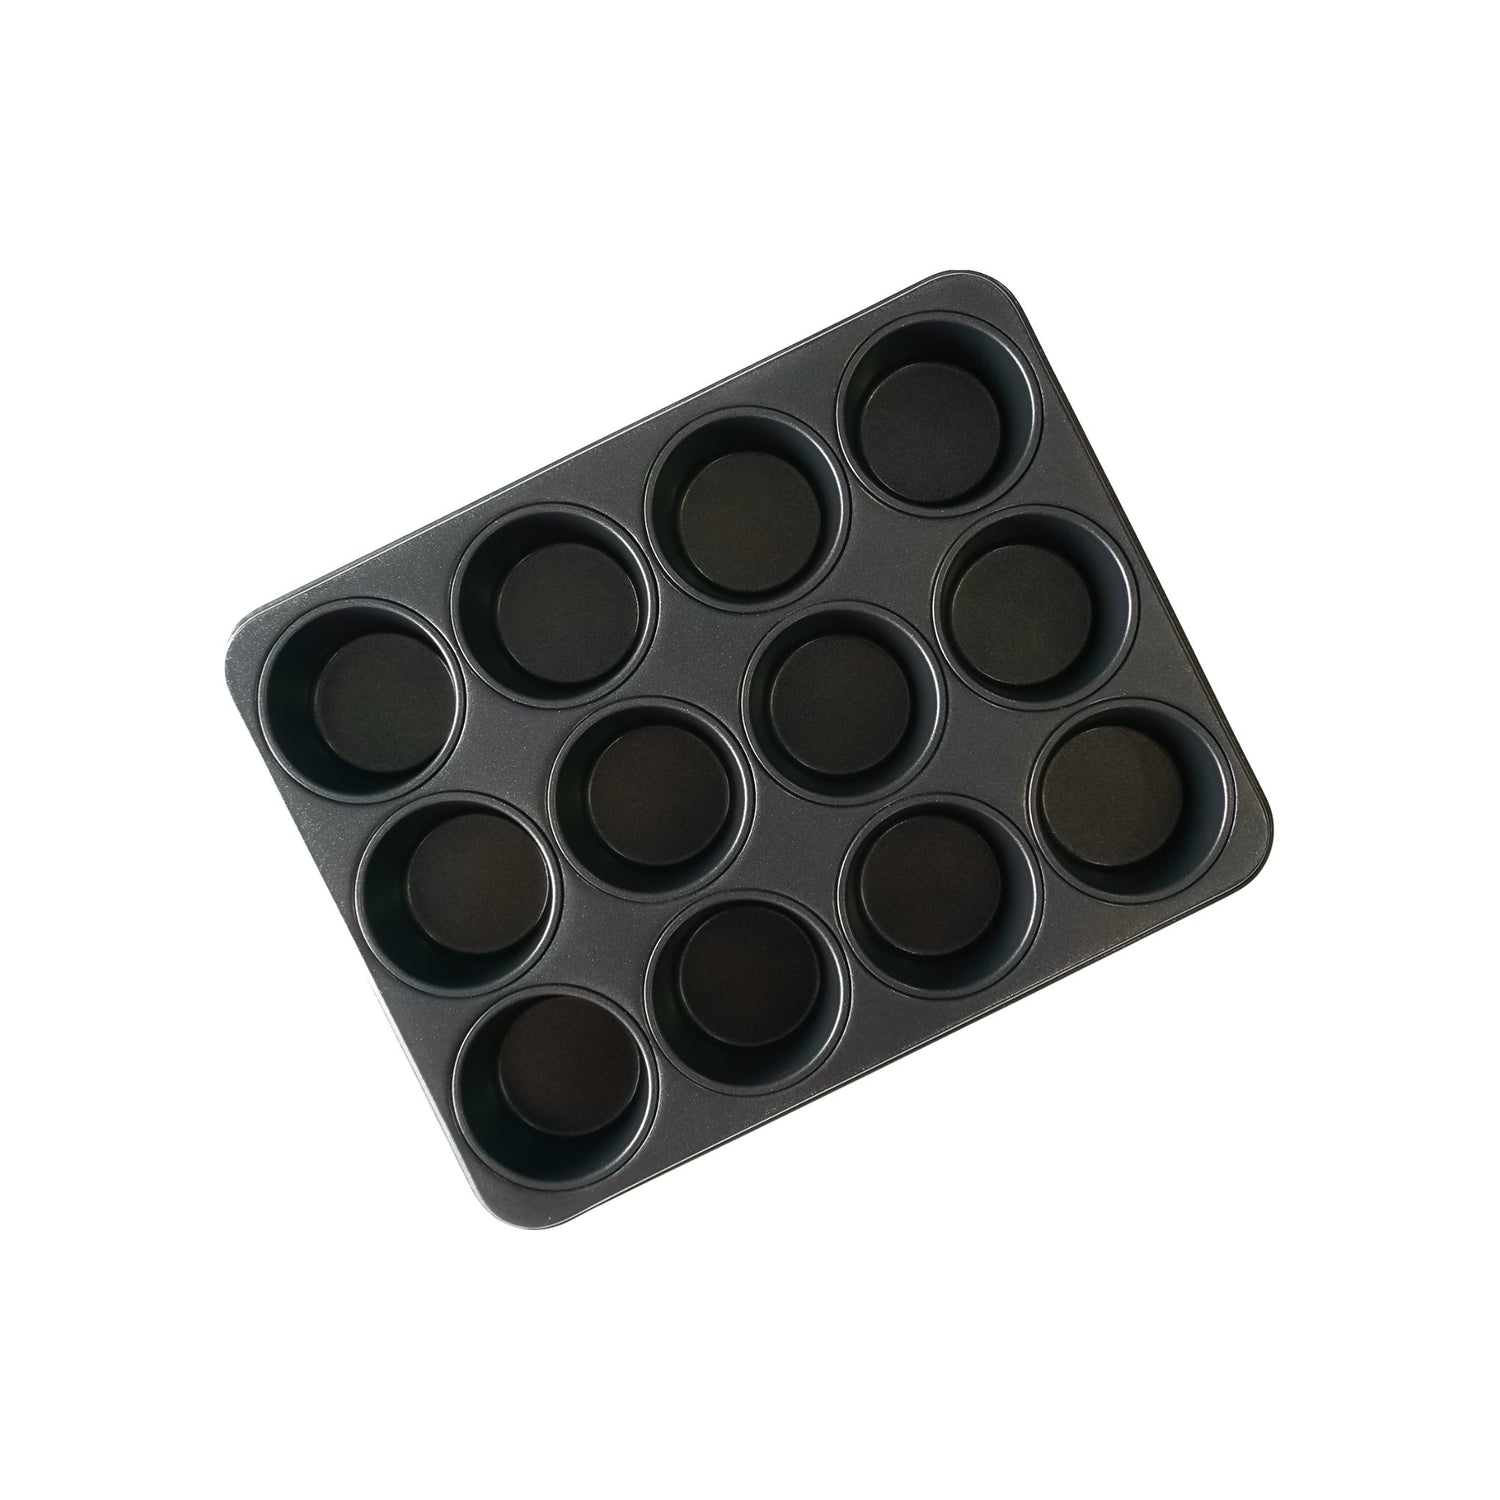 de Buyer 12-Cup Non-Stick Muffin Tin, Black